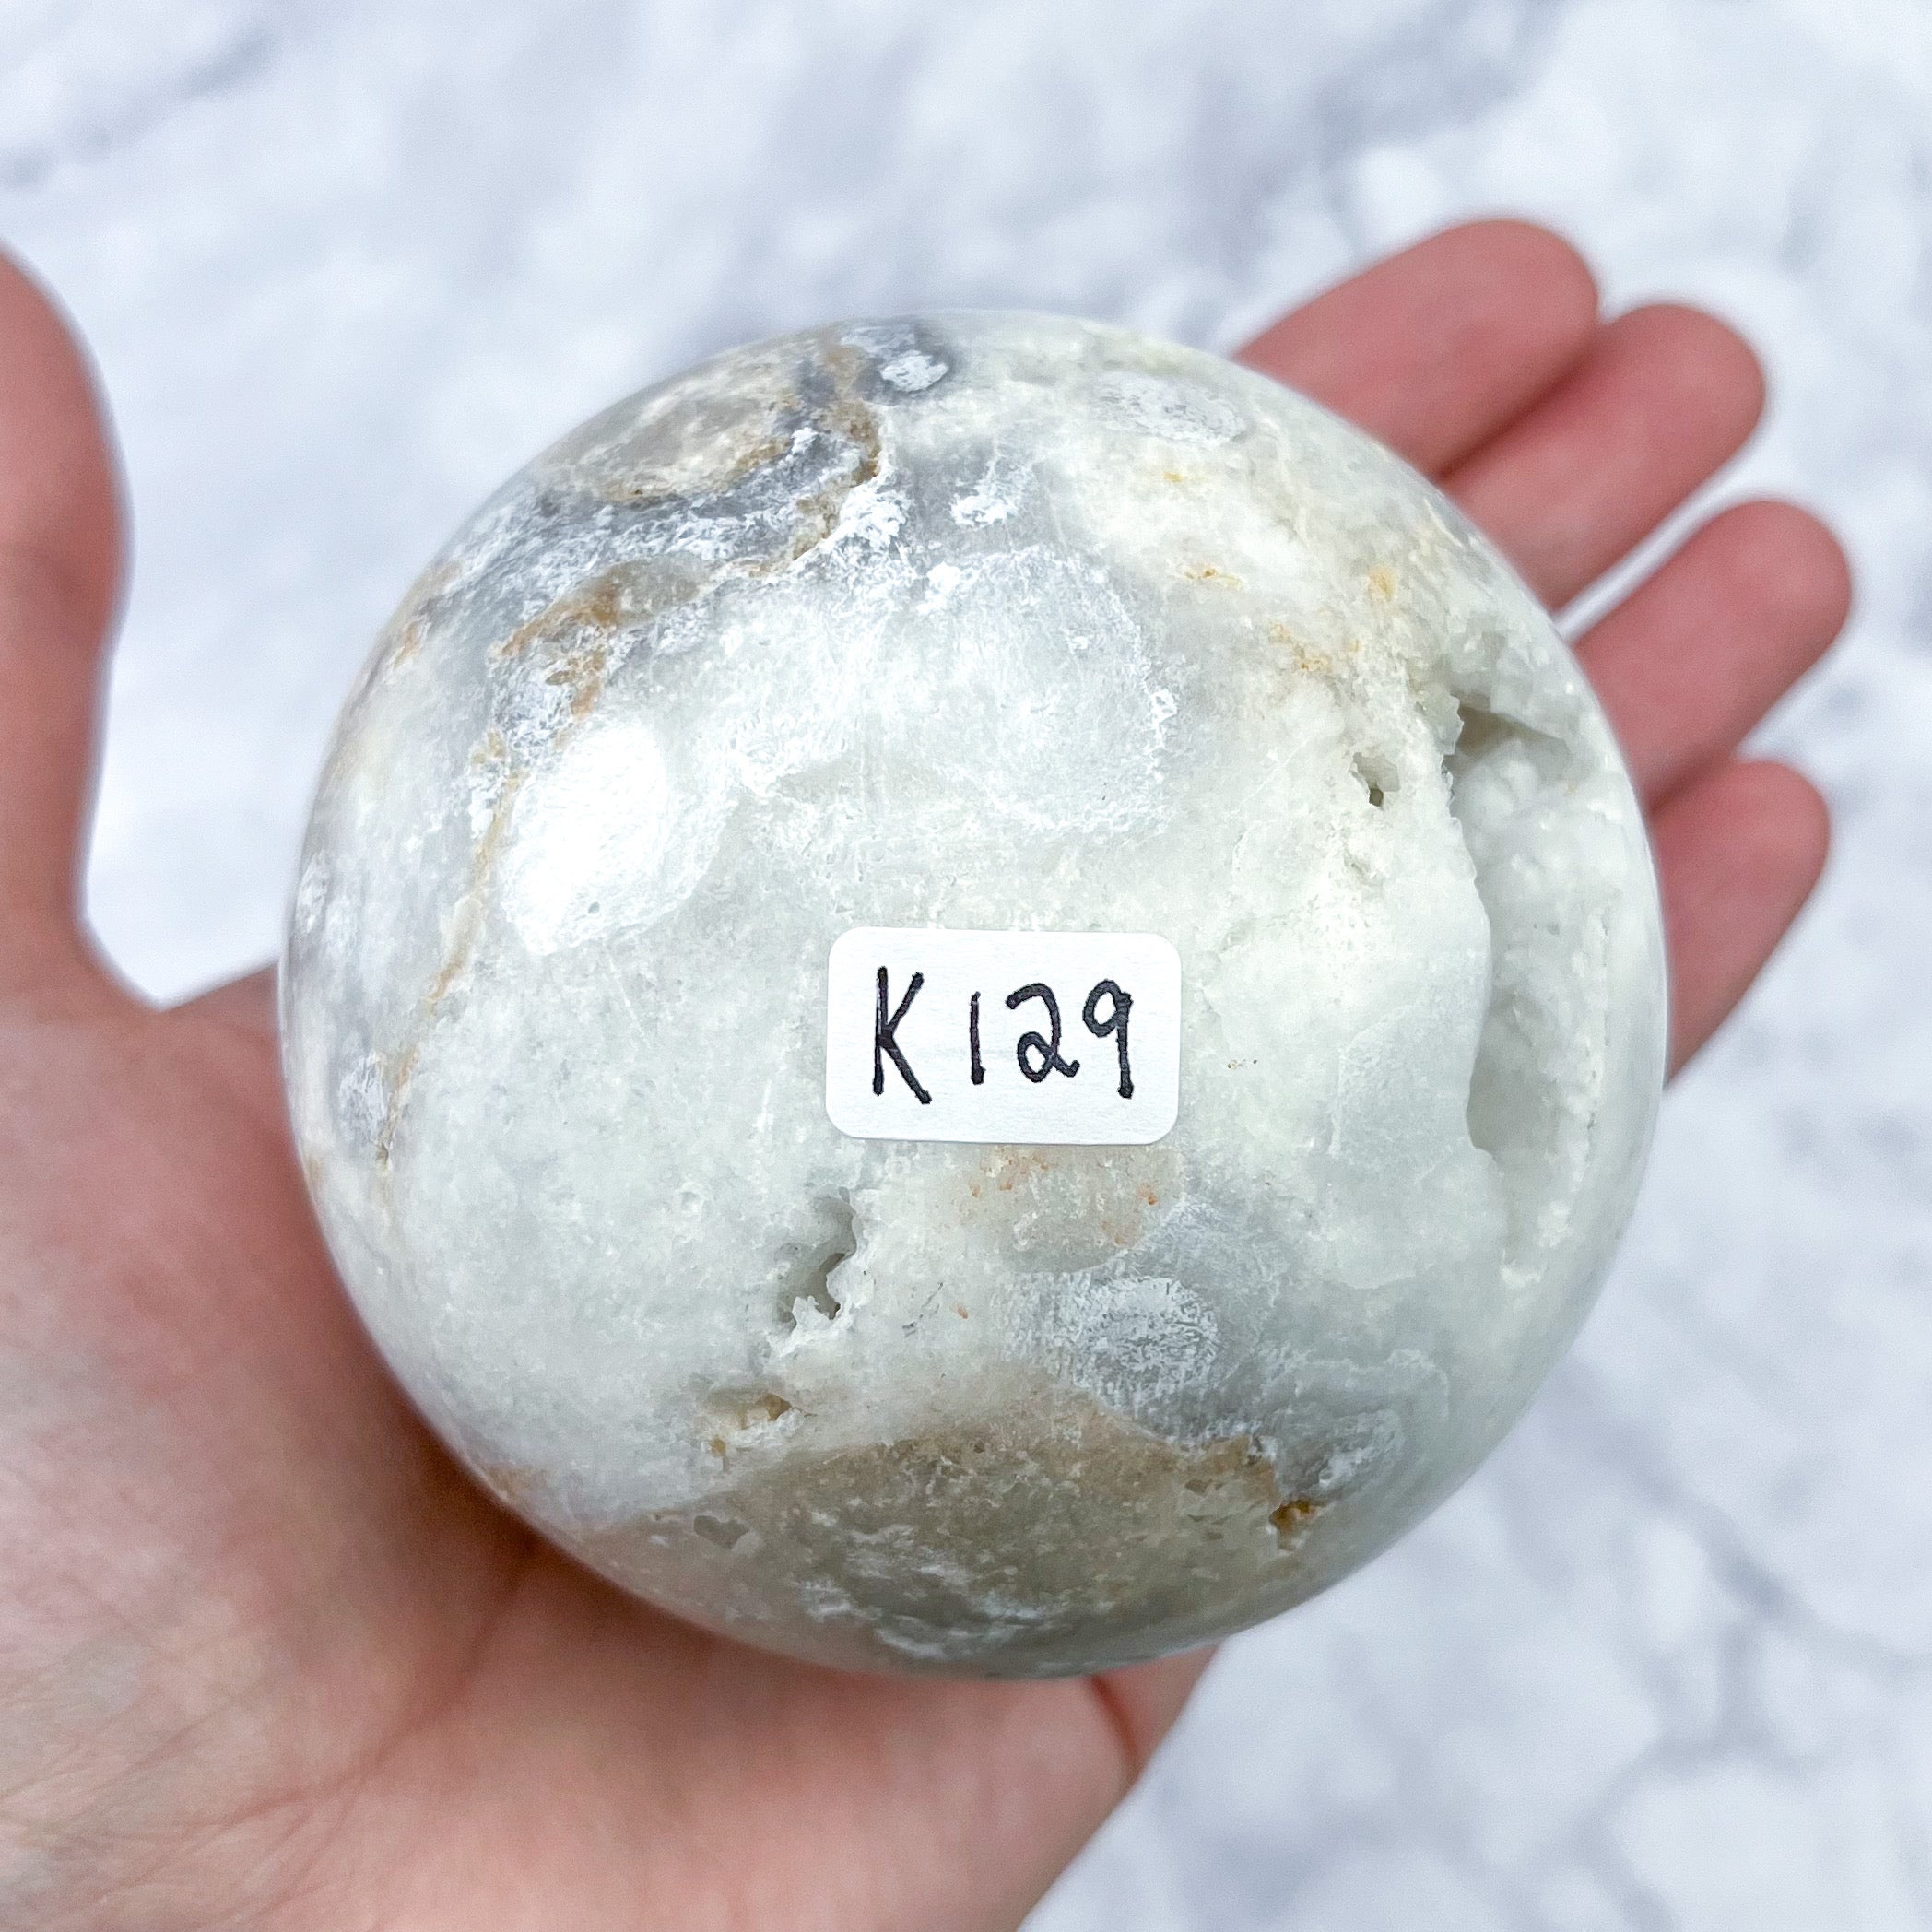 3 Inch Druzy Agate Sphere K129